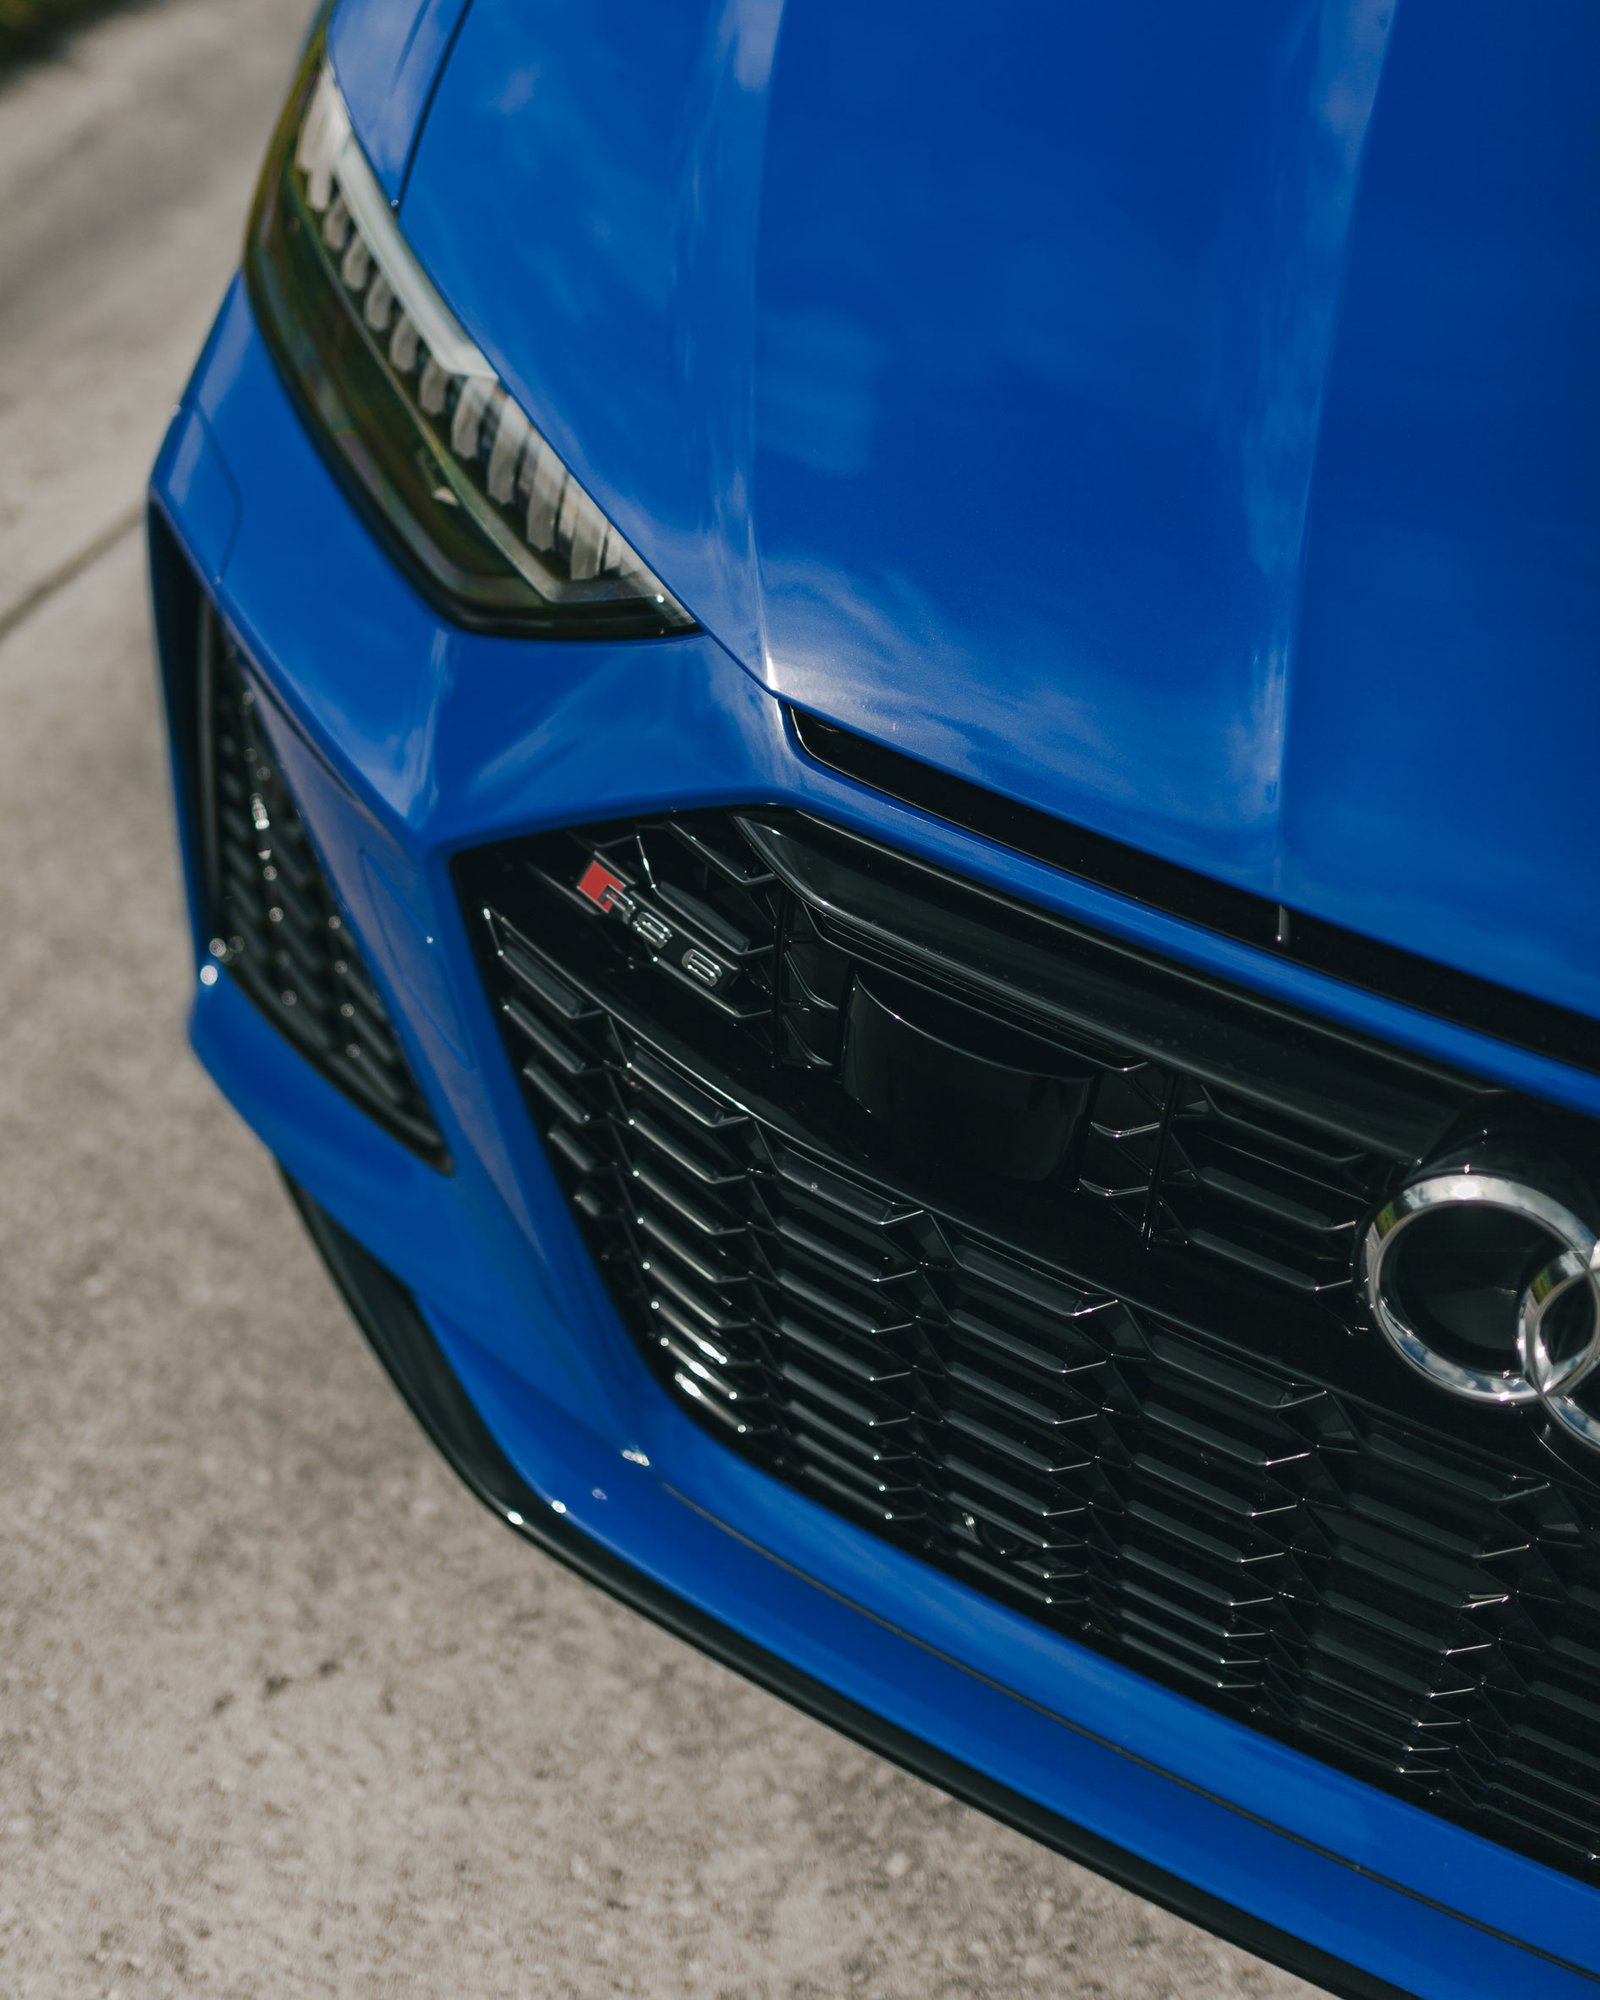 2021 Audi RS6 Avant - Nogaro Blue Tribute Edition - 1 of ...